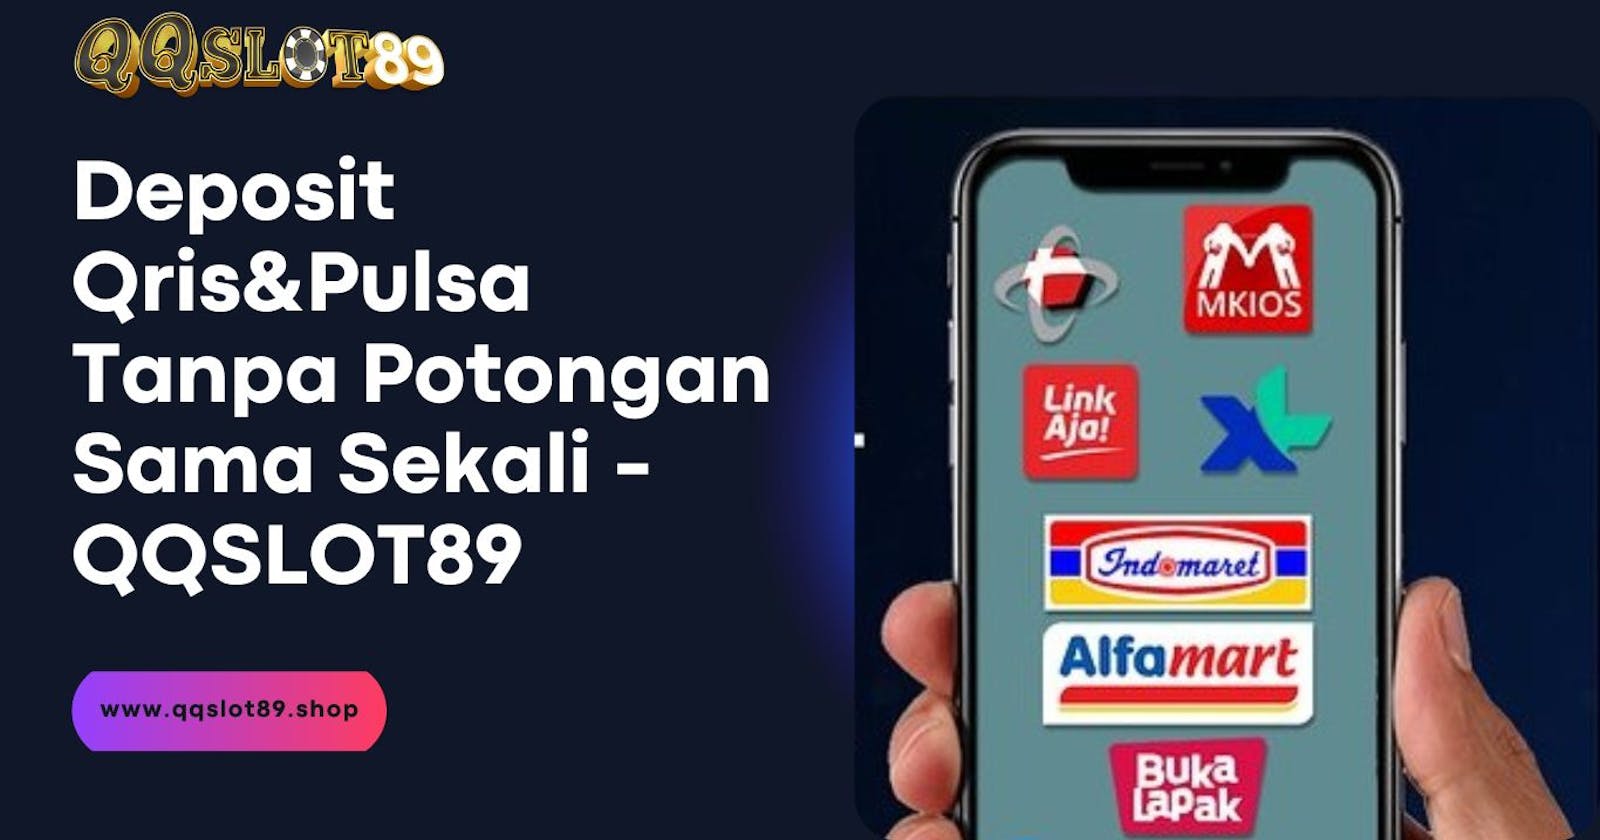 Deposit QRis&Pulsa Tanpa Potongan Sama Sekali - QQSLOT89